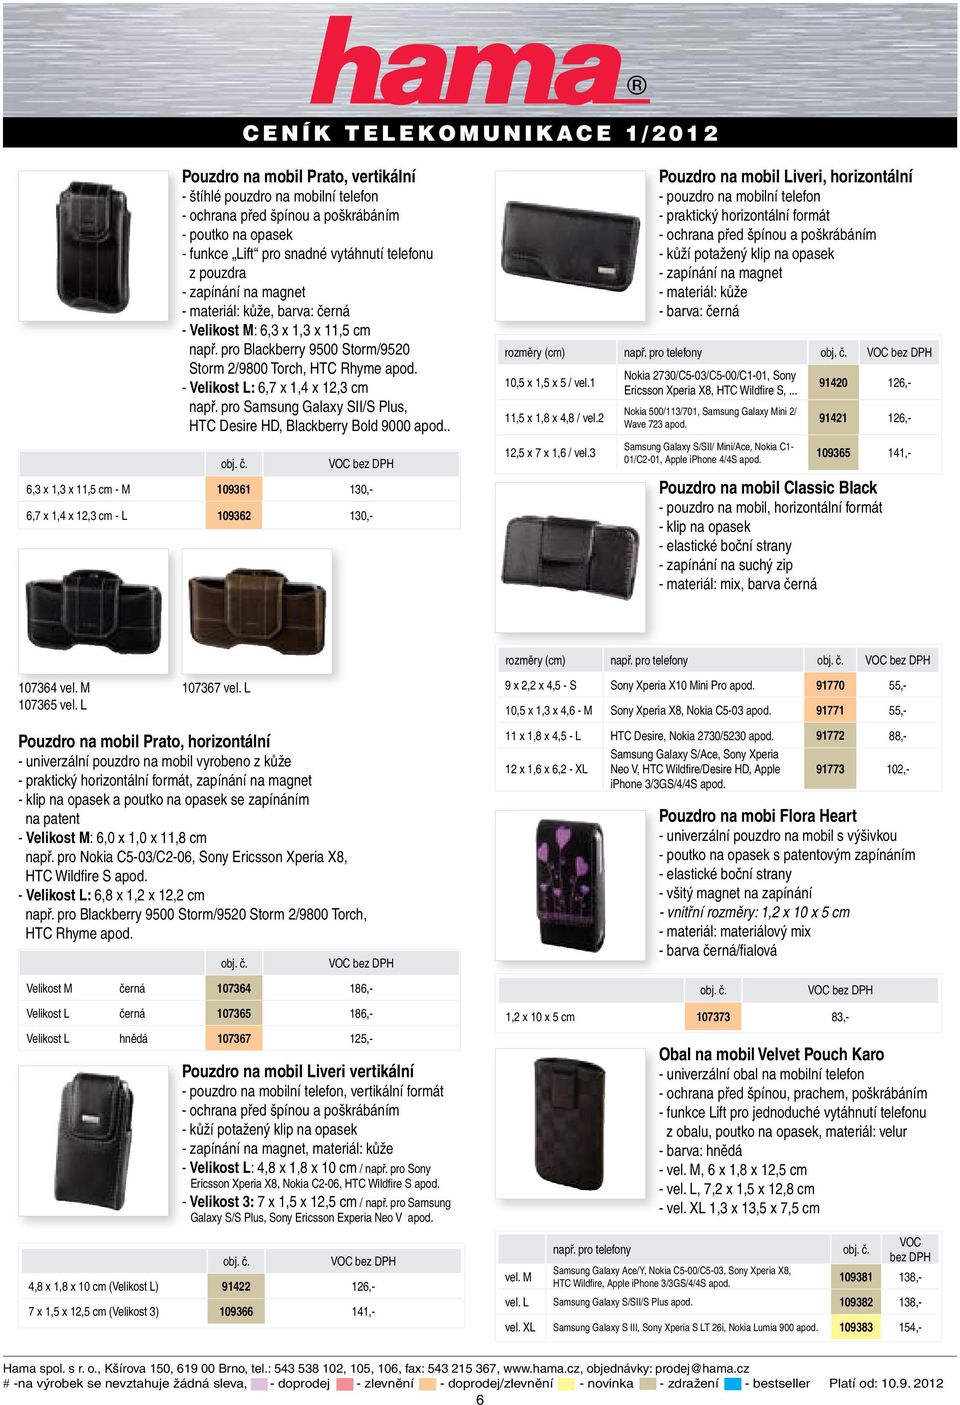 pro Samsung Galaxy SII/S Plus, HTC Desire HD, Blackberry Bold 9000 apod.